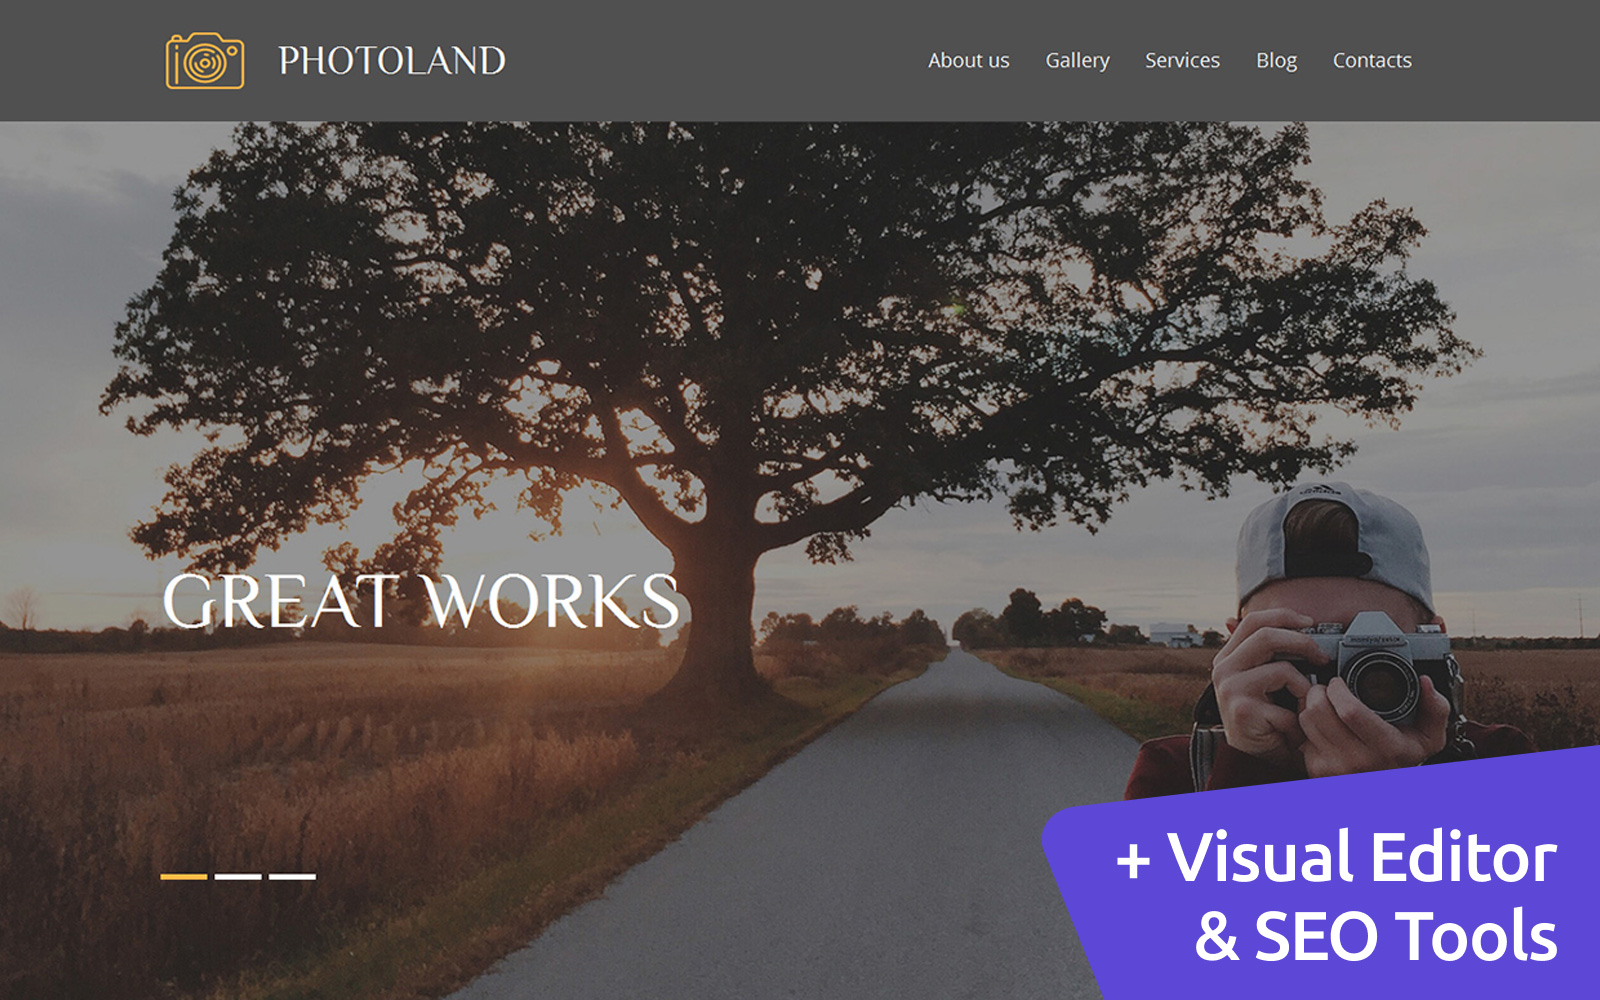 Wedding Photography Photo Gallery Website Powered by MotoCMS 3 Website Builder